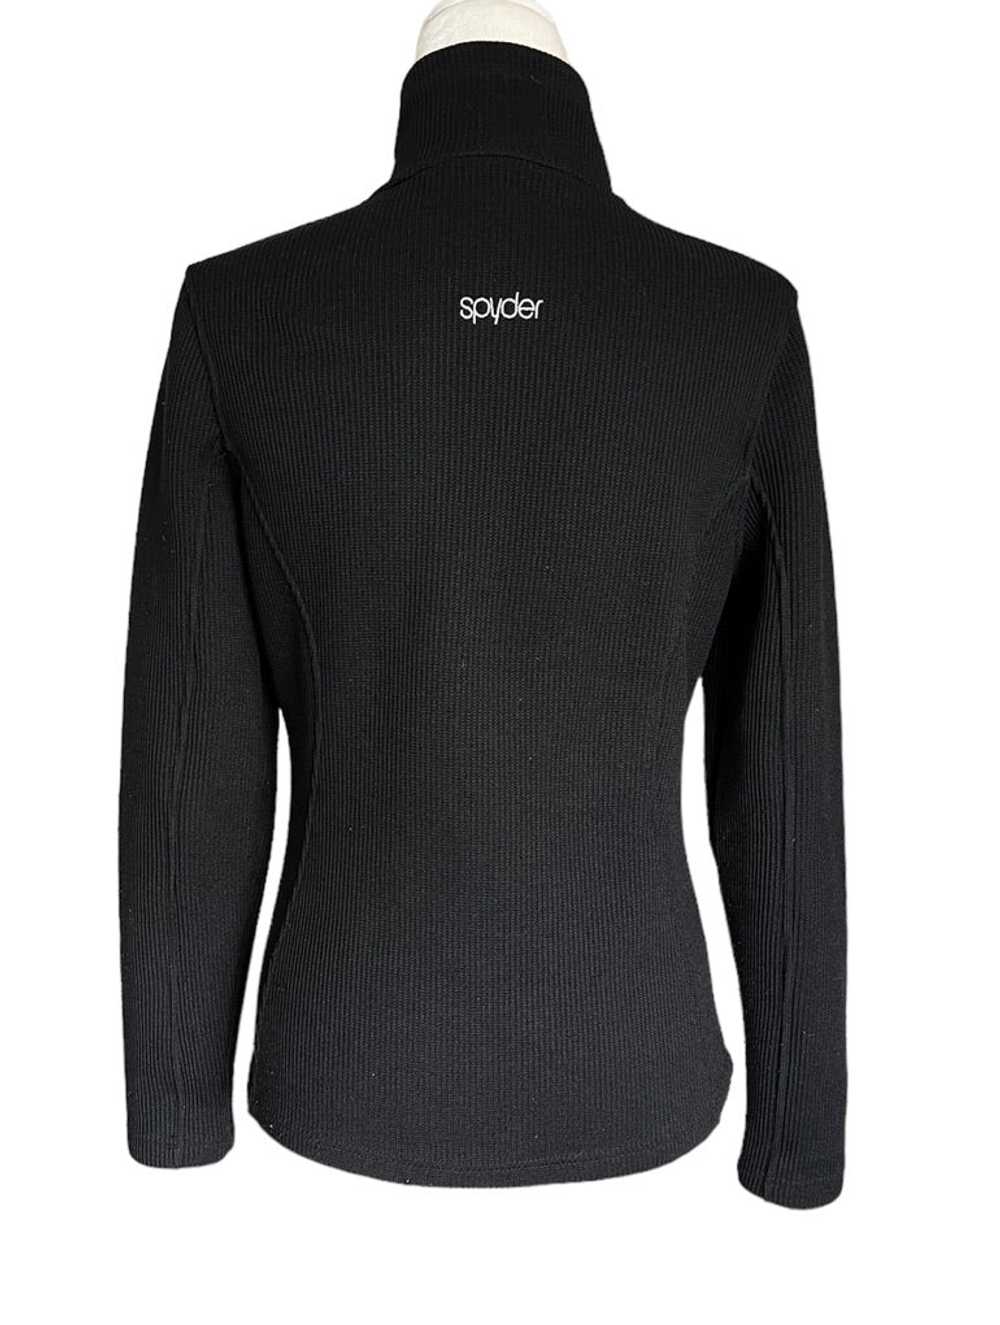 Spyder Black Zipper Core Sweater Jacket, M - image 4